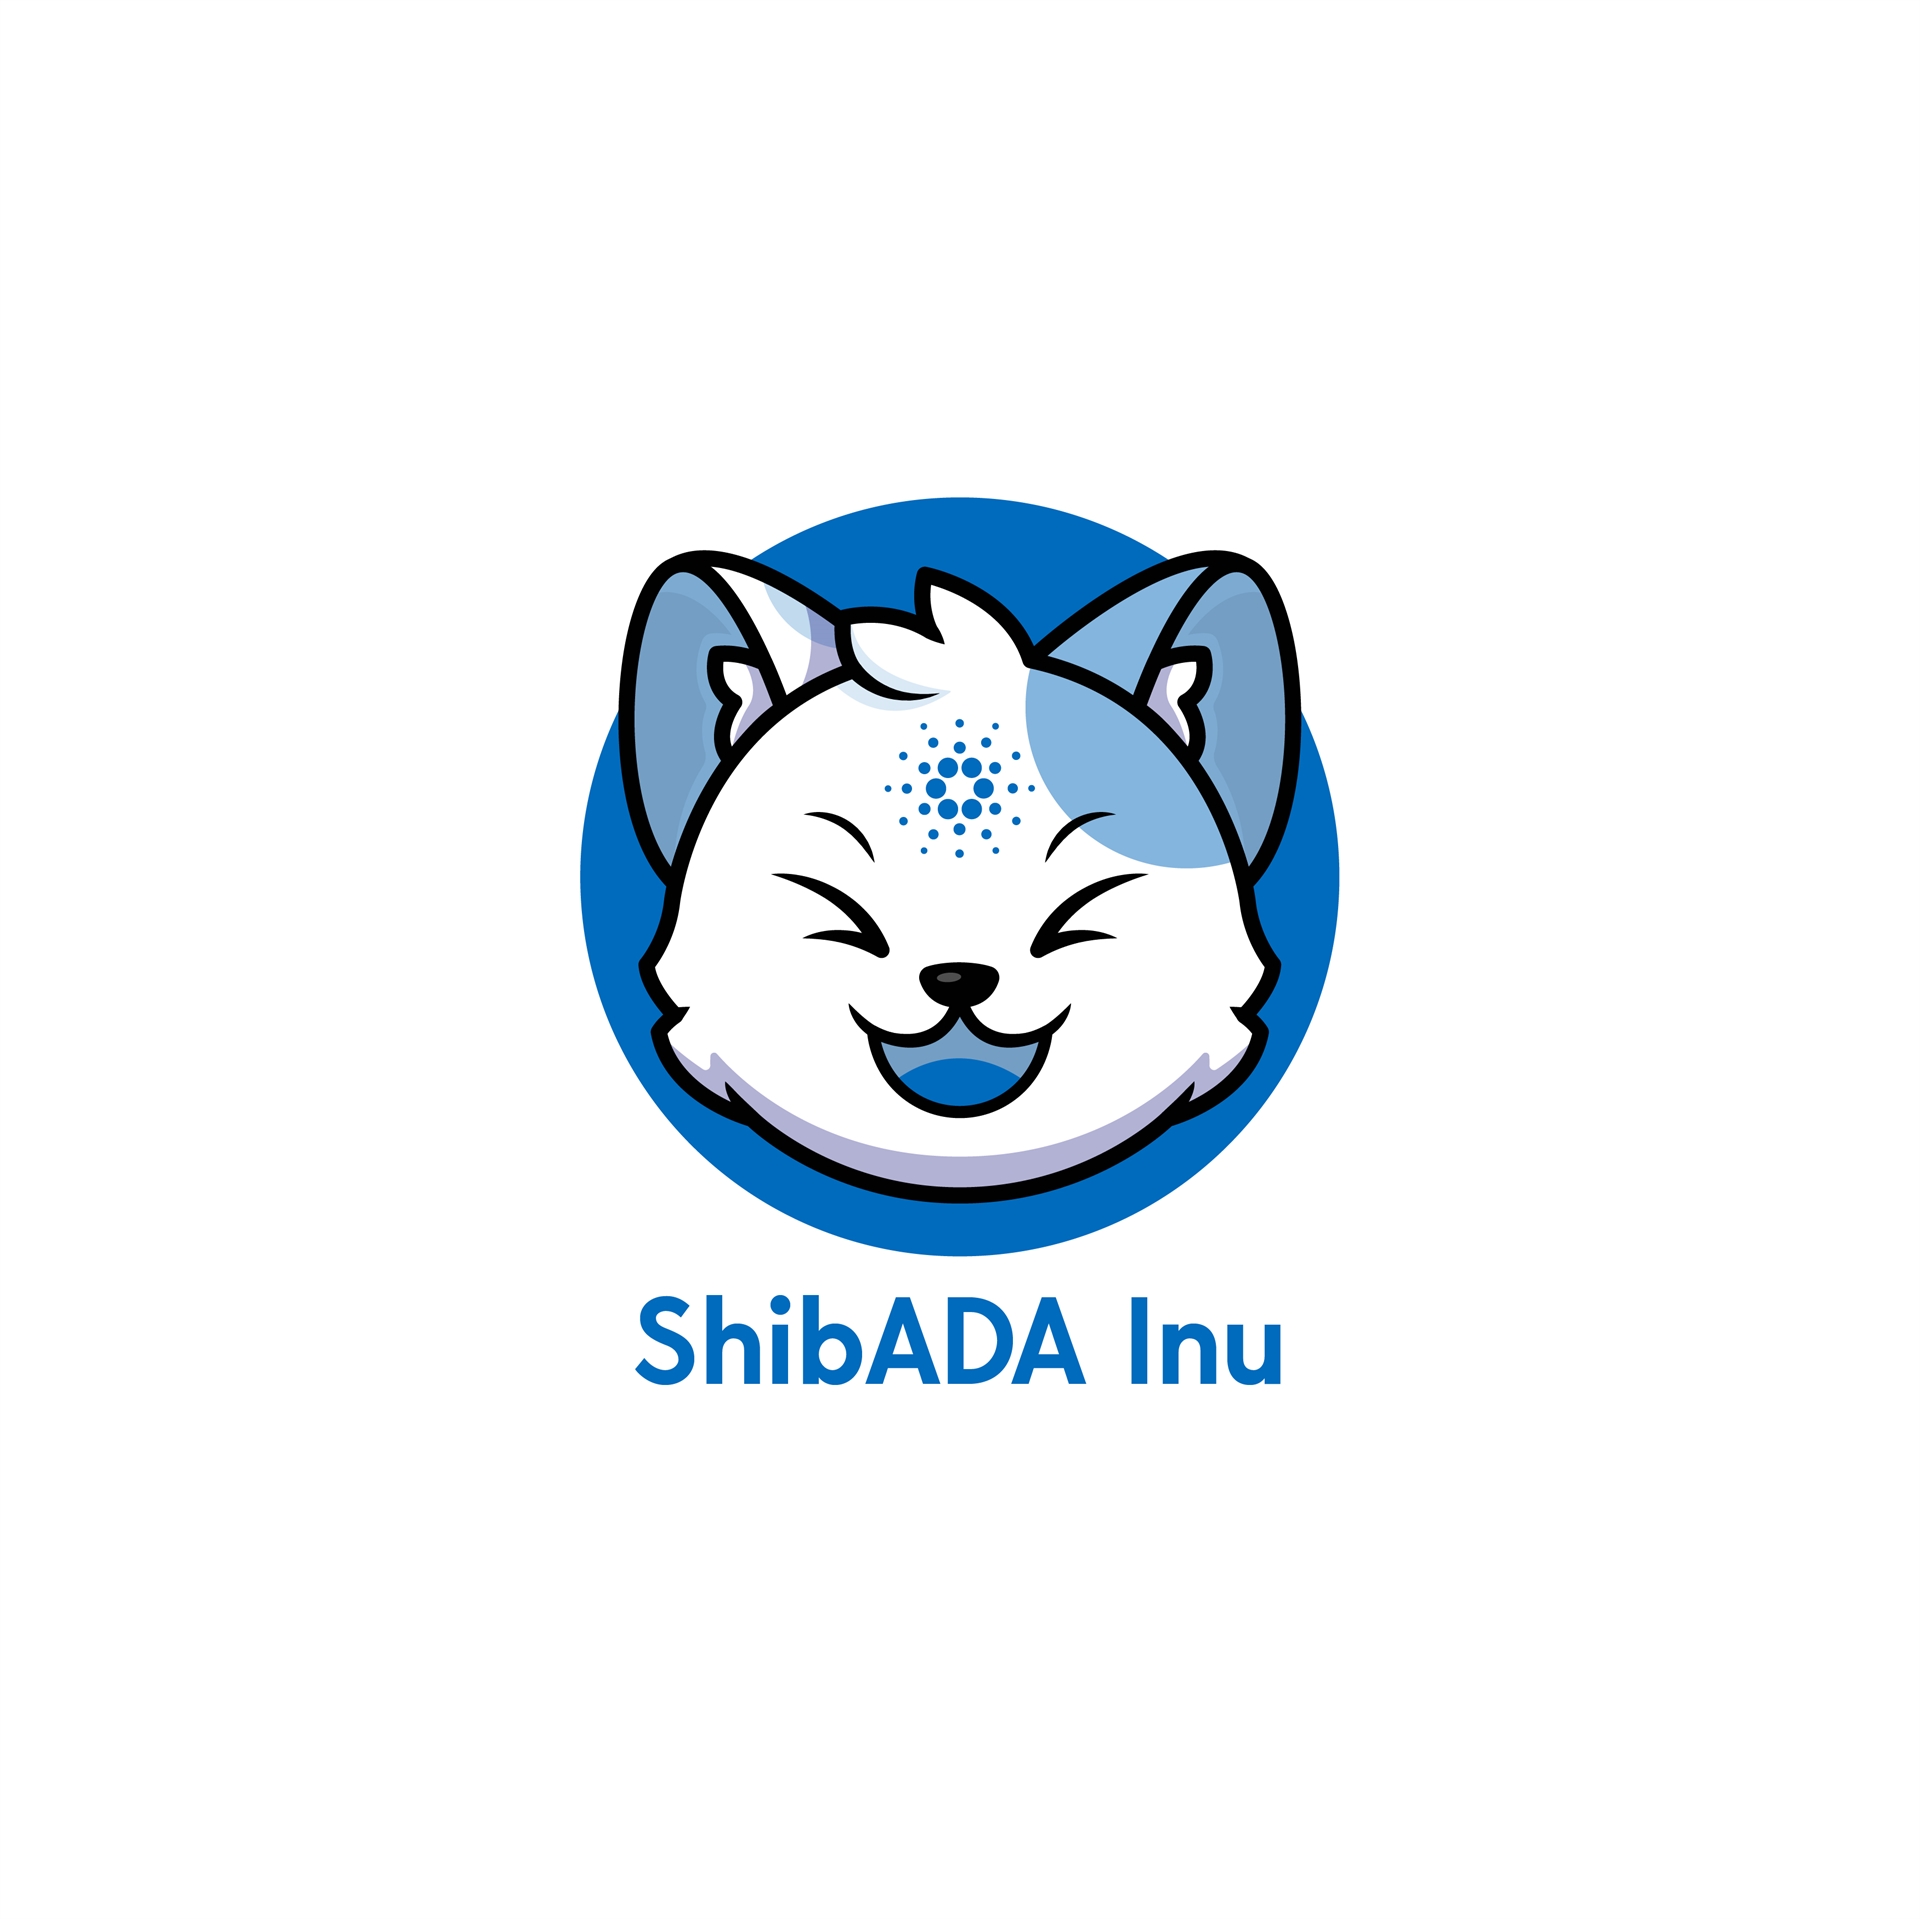 ShibADA Inu